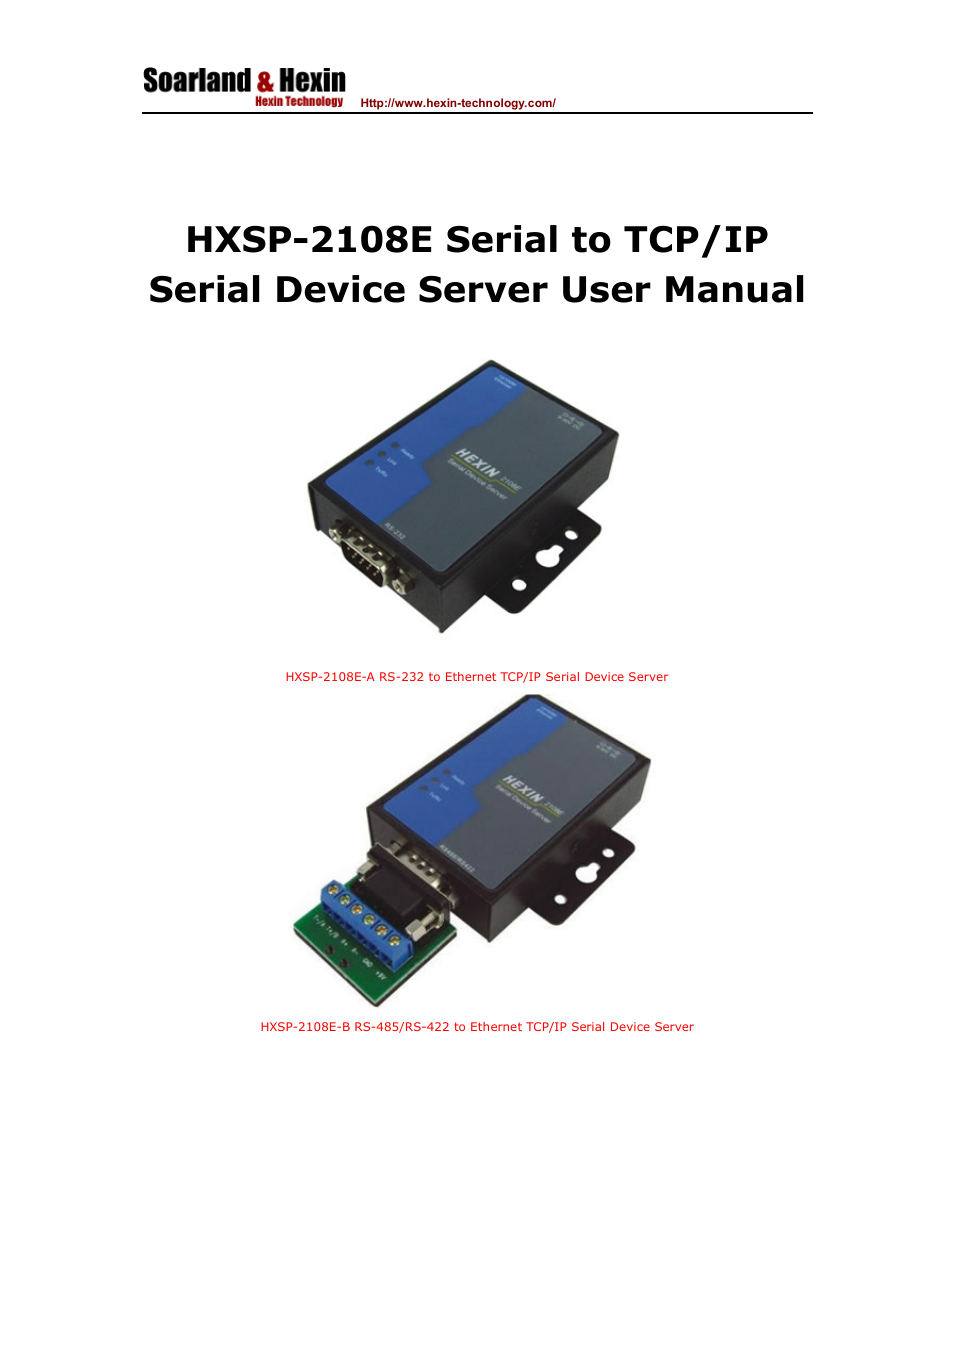 HXSP-2108E-A RS-232 To Ethernet TCP/IP Serial Device Server